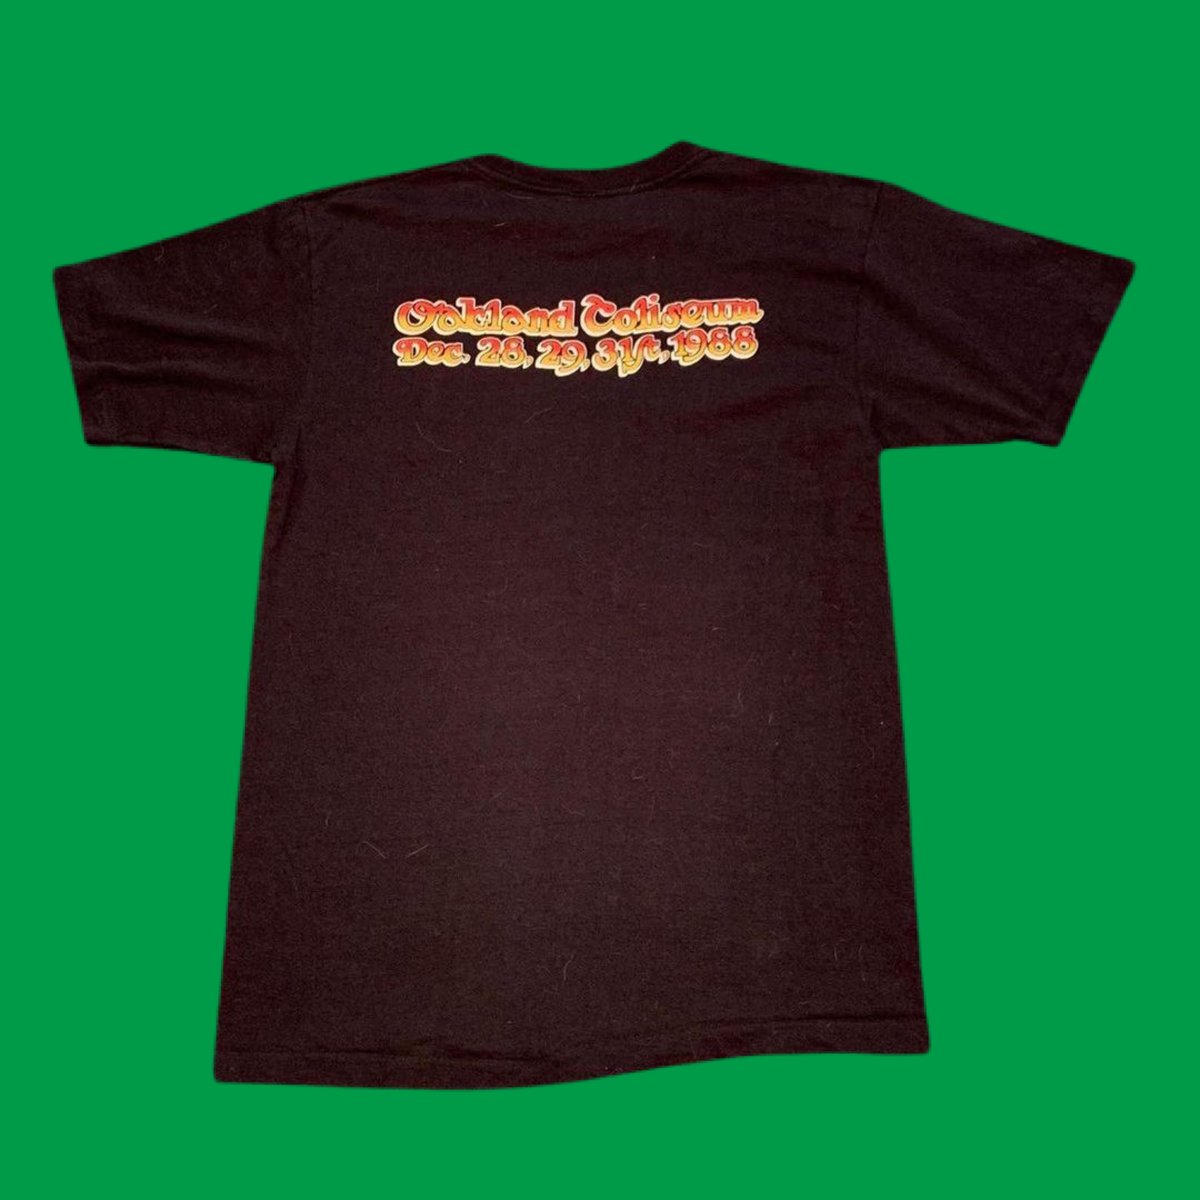 Original Vintage Grateful Dead 1988/89 NYE Short Sleeve Tee! Medium